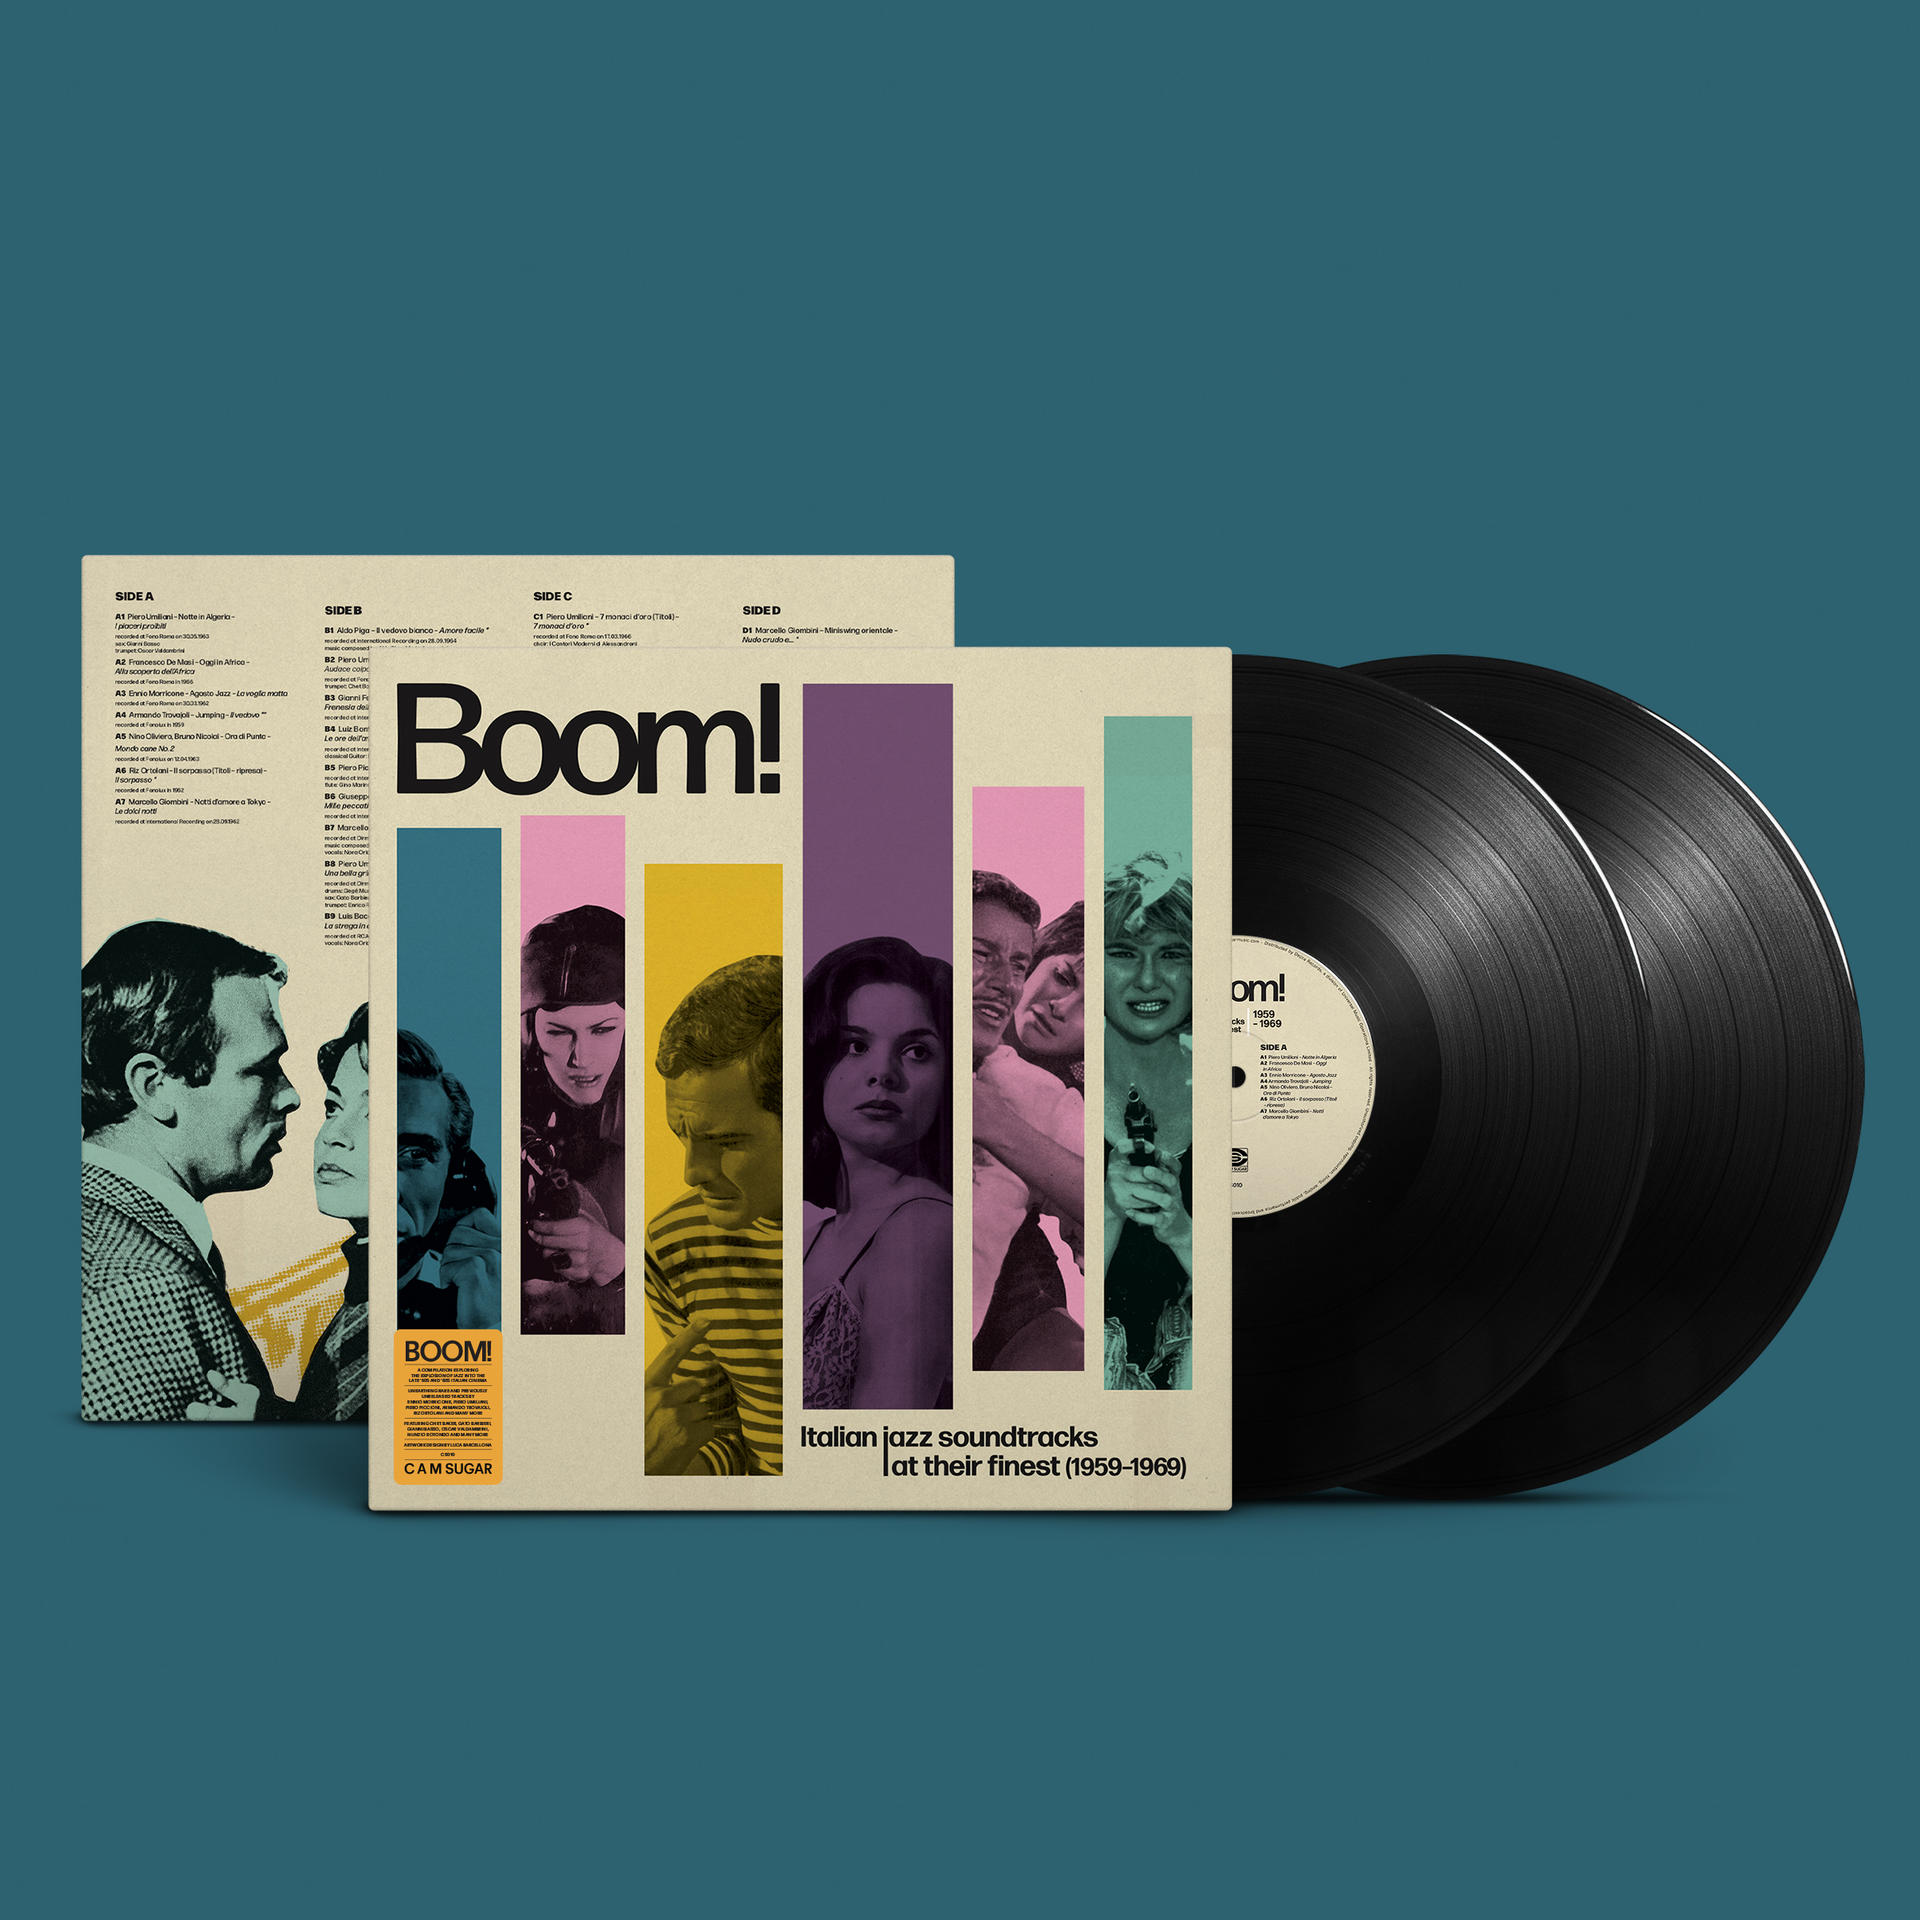 VARIOUS - Jazz - Italian (Vinyl) Their Boom! At Soundtracks Finest